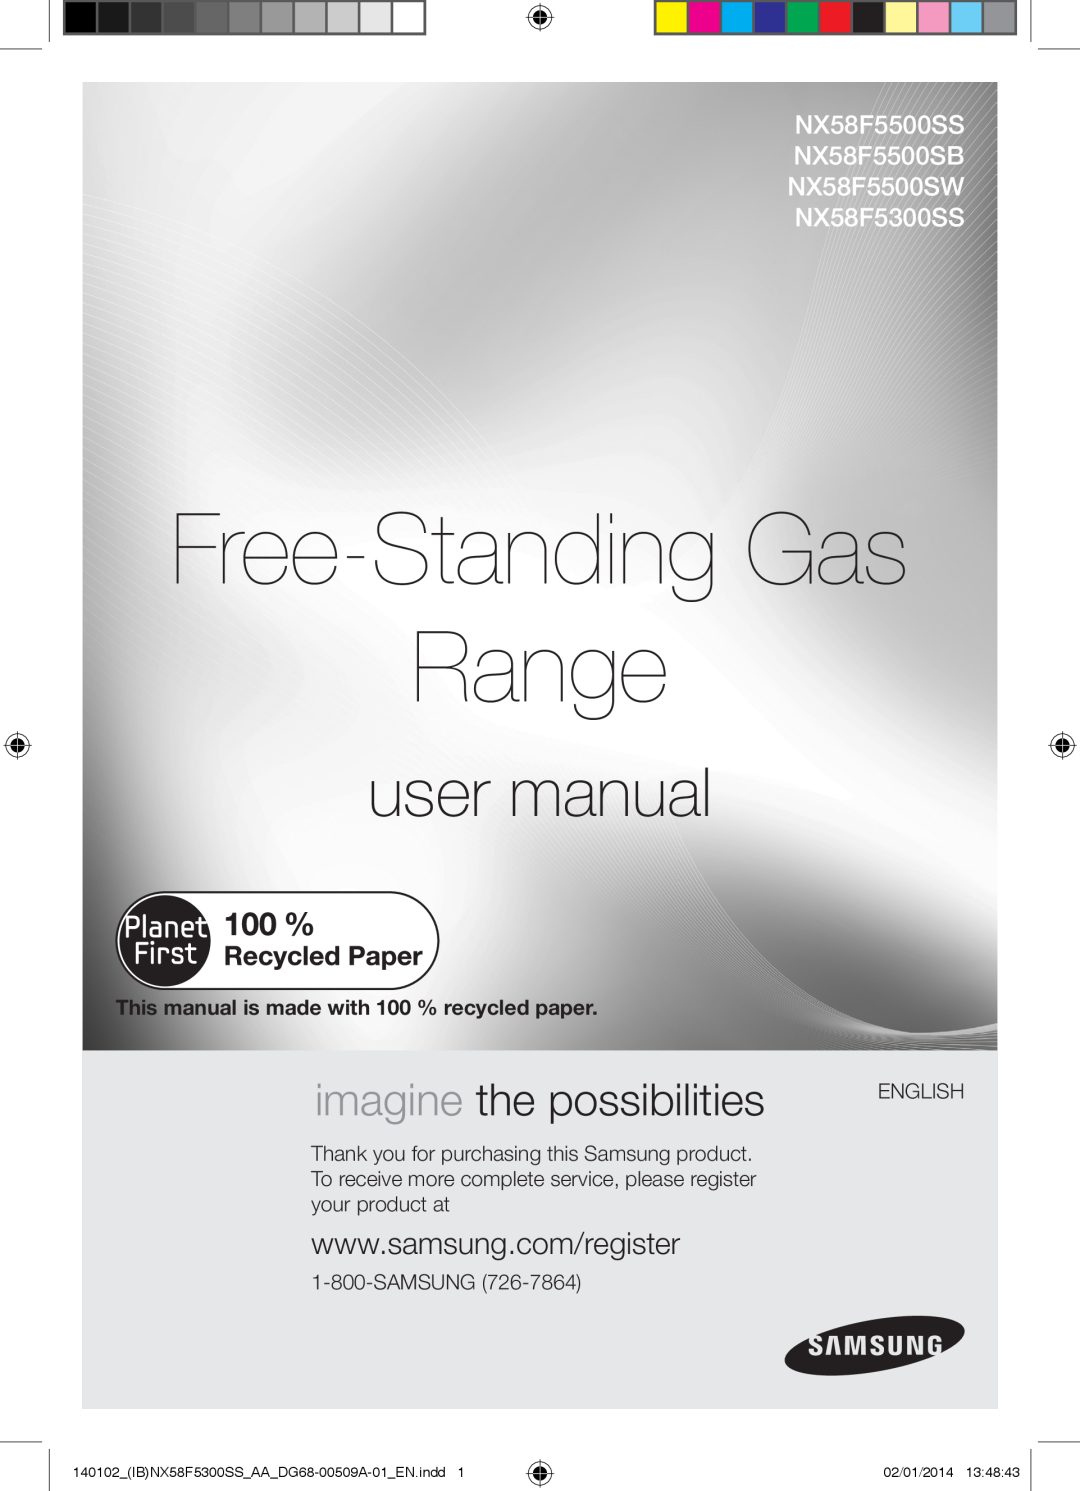 Samsung NX58F5500SW user manual Free-Standing Gas Range, imagine the possibilities, 02/01/2014 